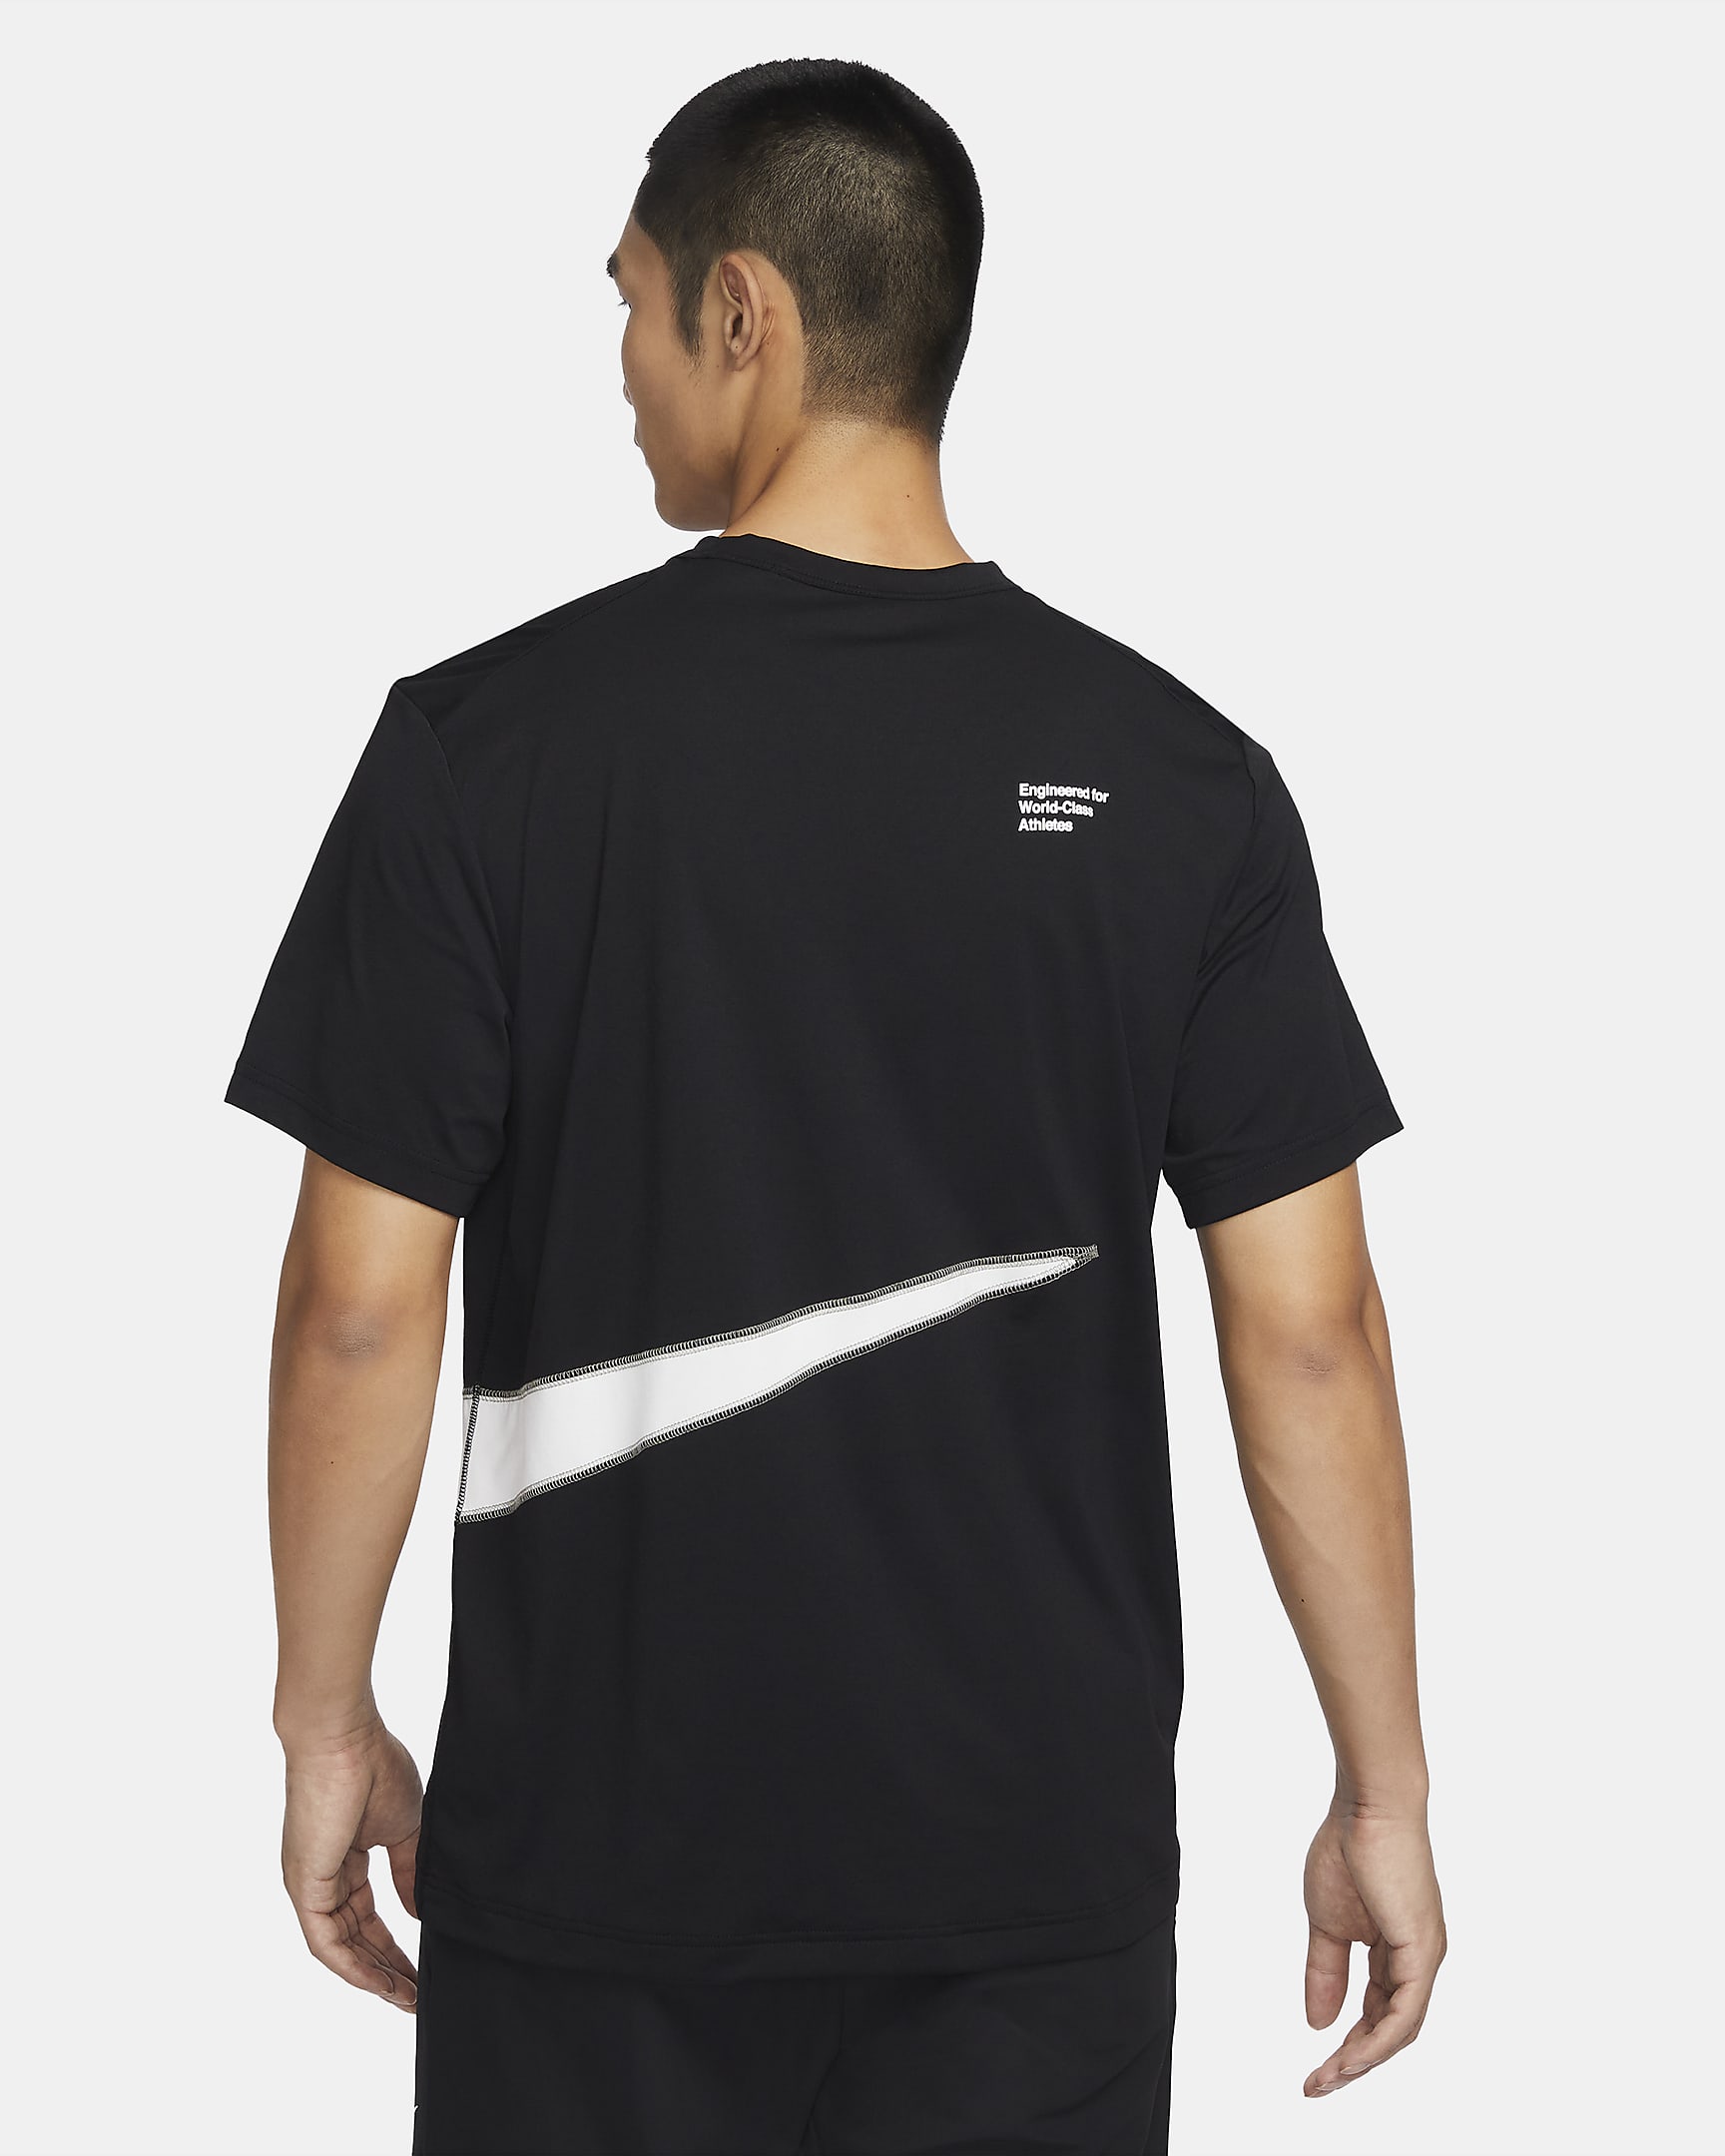 Nike Dri-FIT UV Hyverse Men's Short-Sleeve Fitness Top. Nike IN